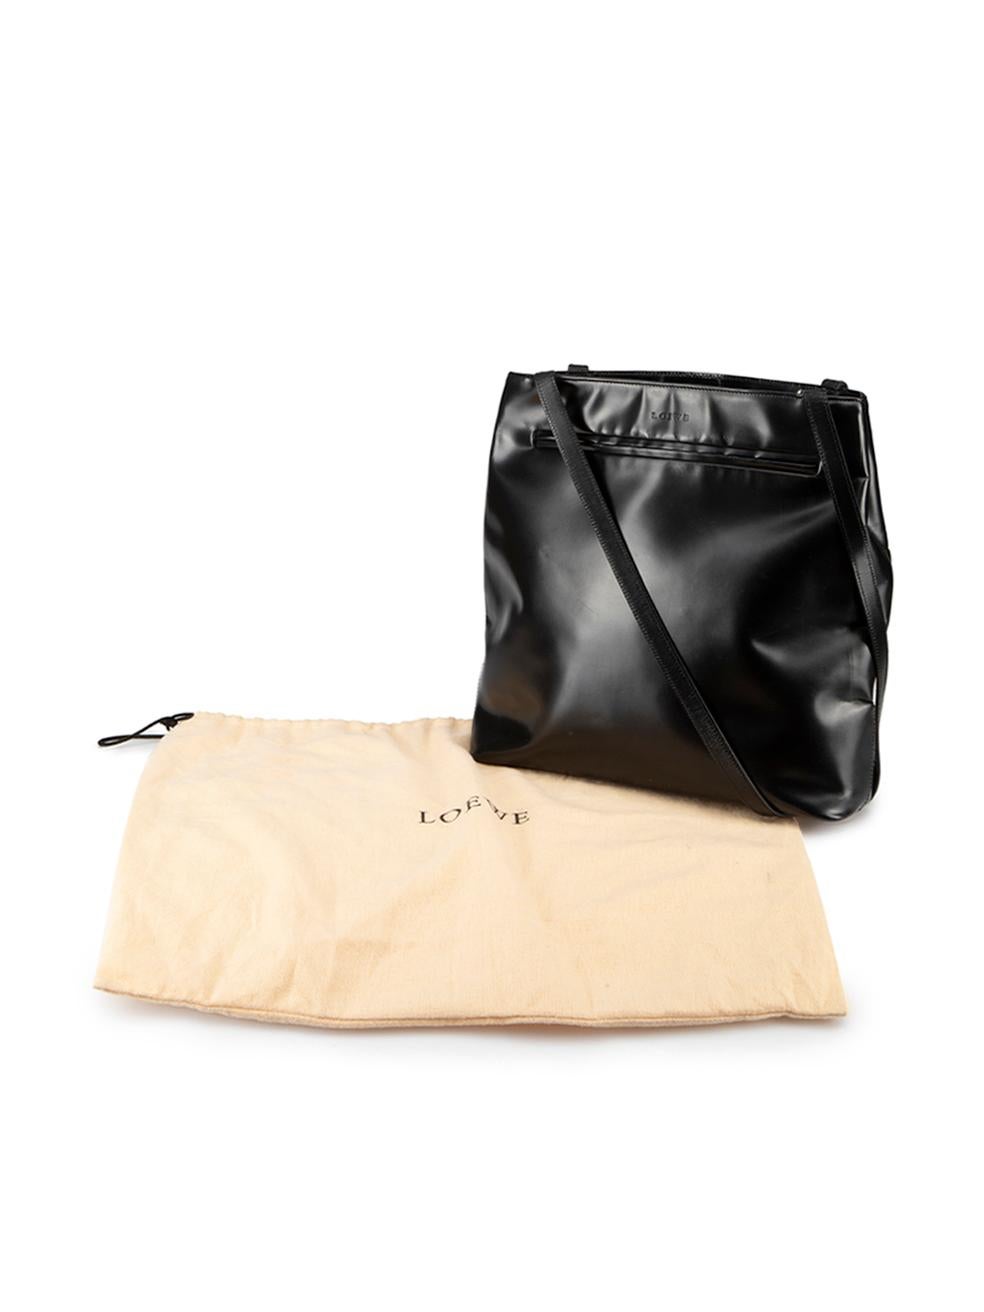 Loewe Women's Black Leather Top Handle Tote Bag For Sale 3